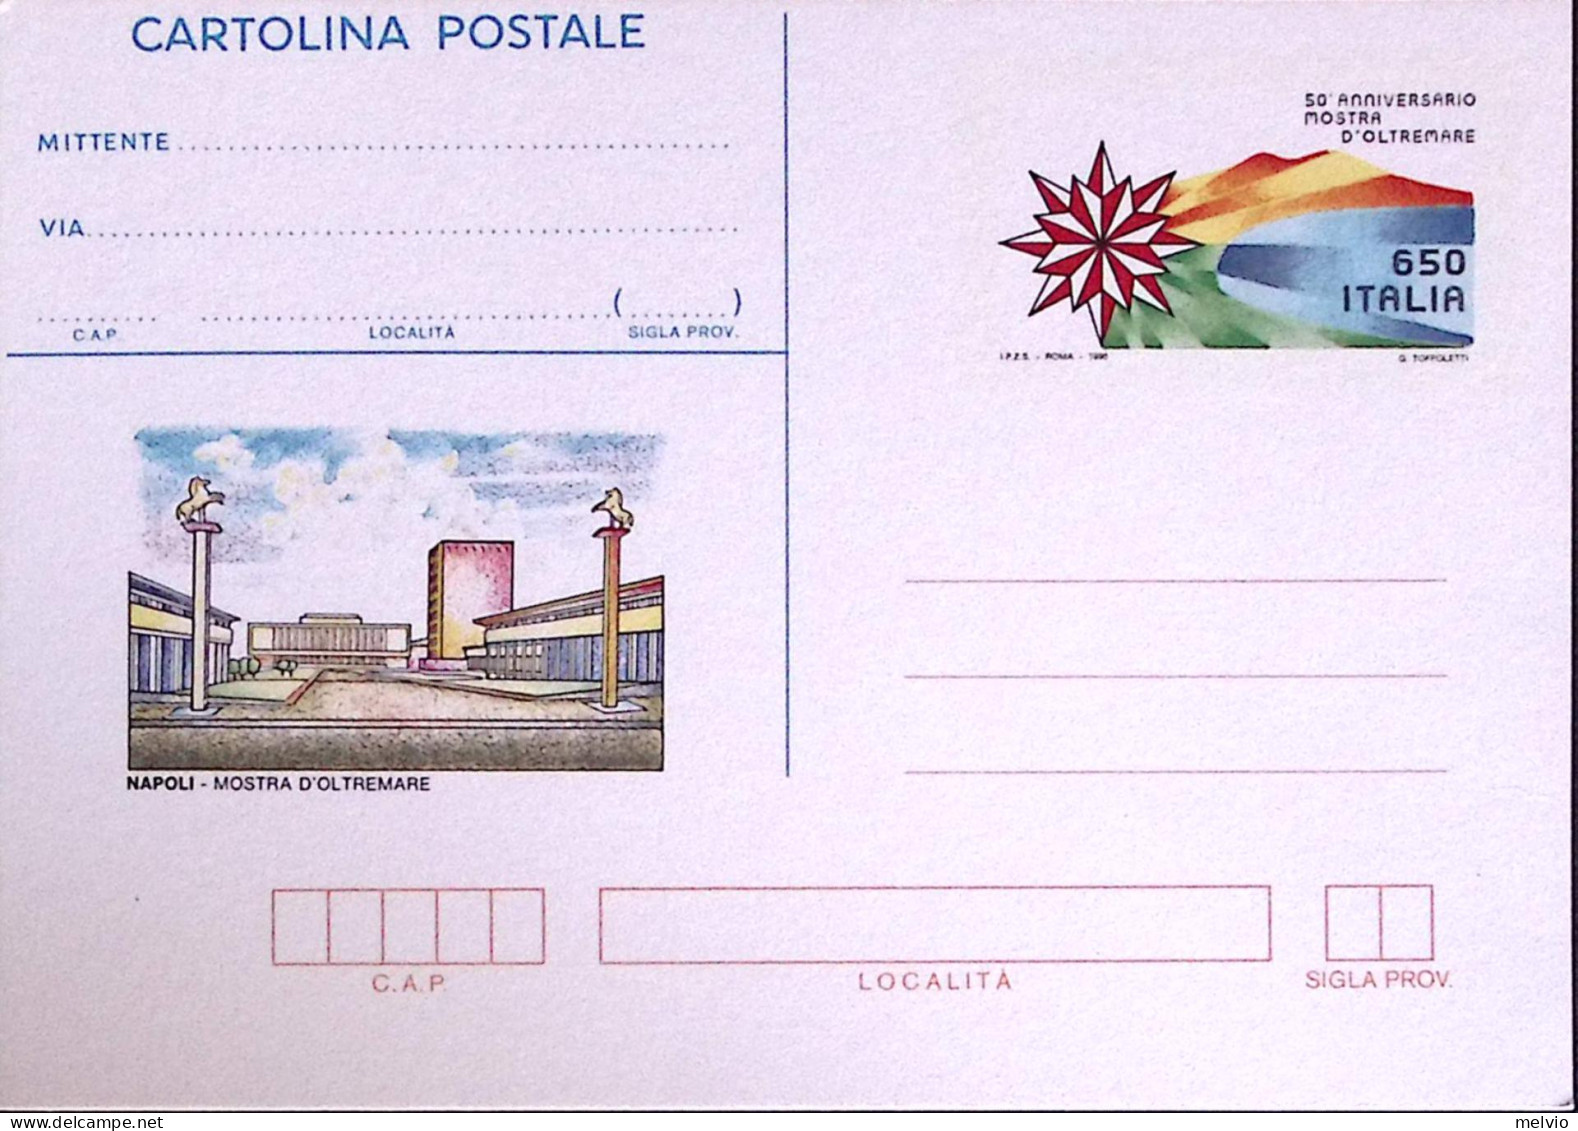 1990-Cartolina Postale Lire 650 Mostra D'oltremare Nuova - Stamped Stationery